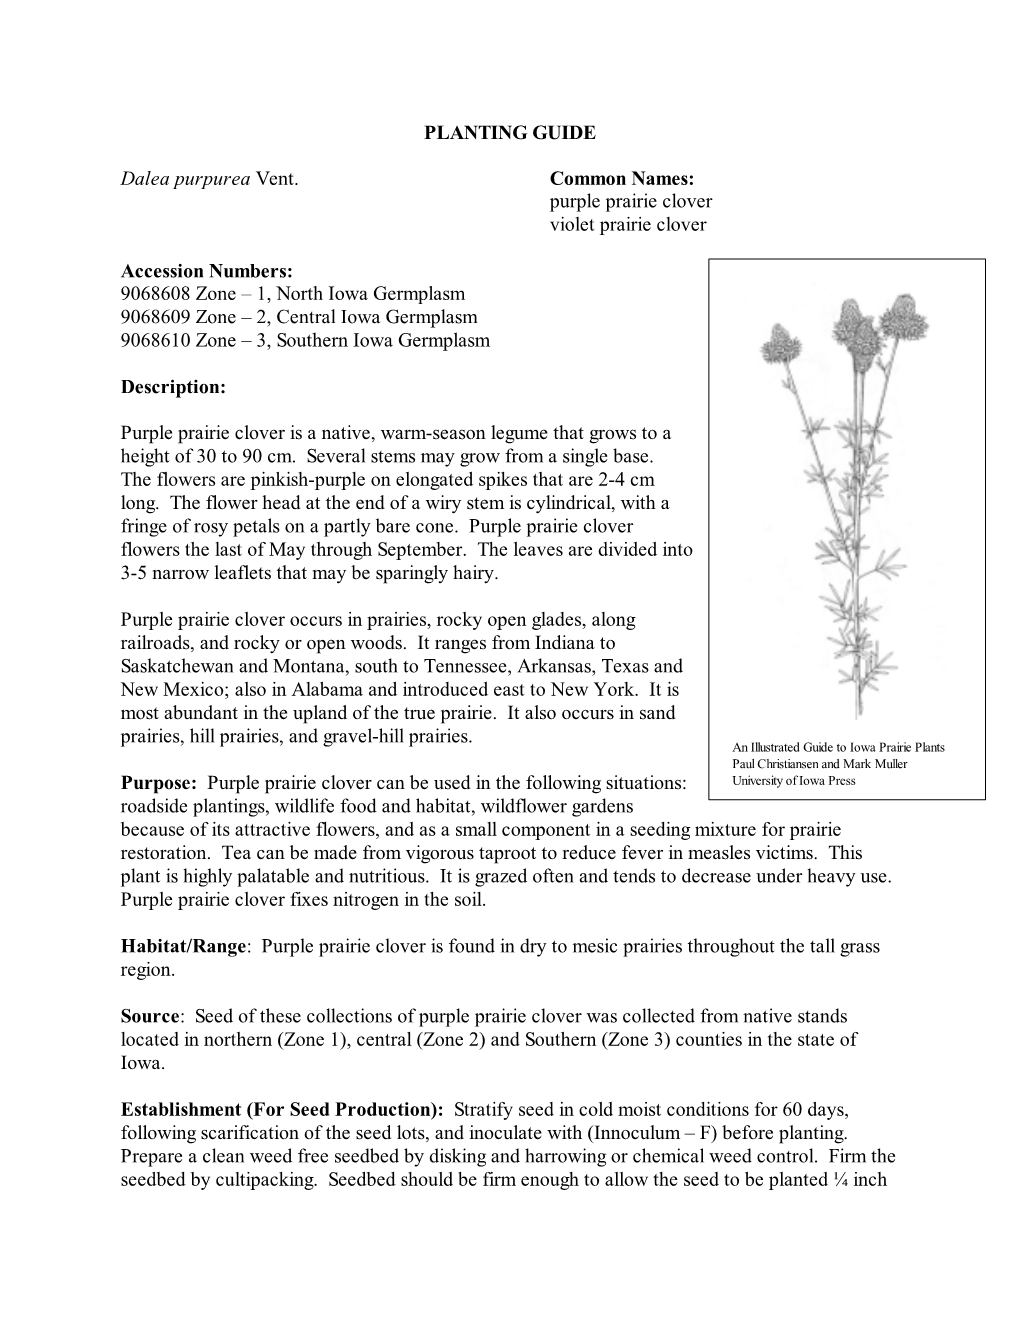 Planting Guide: Dalea Purpurea Iowa Germplasm